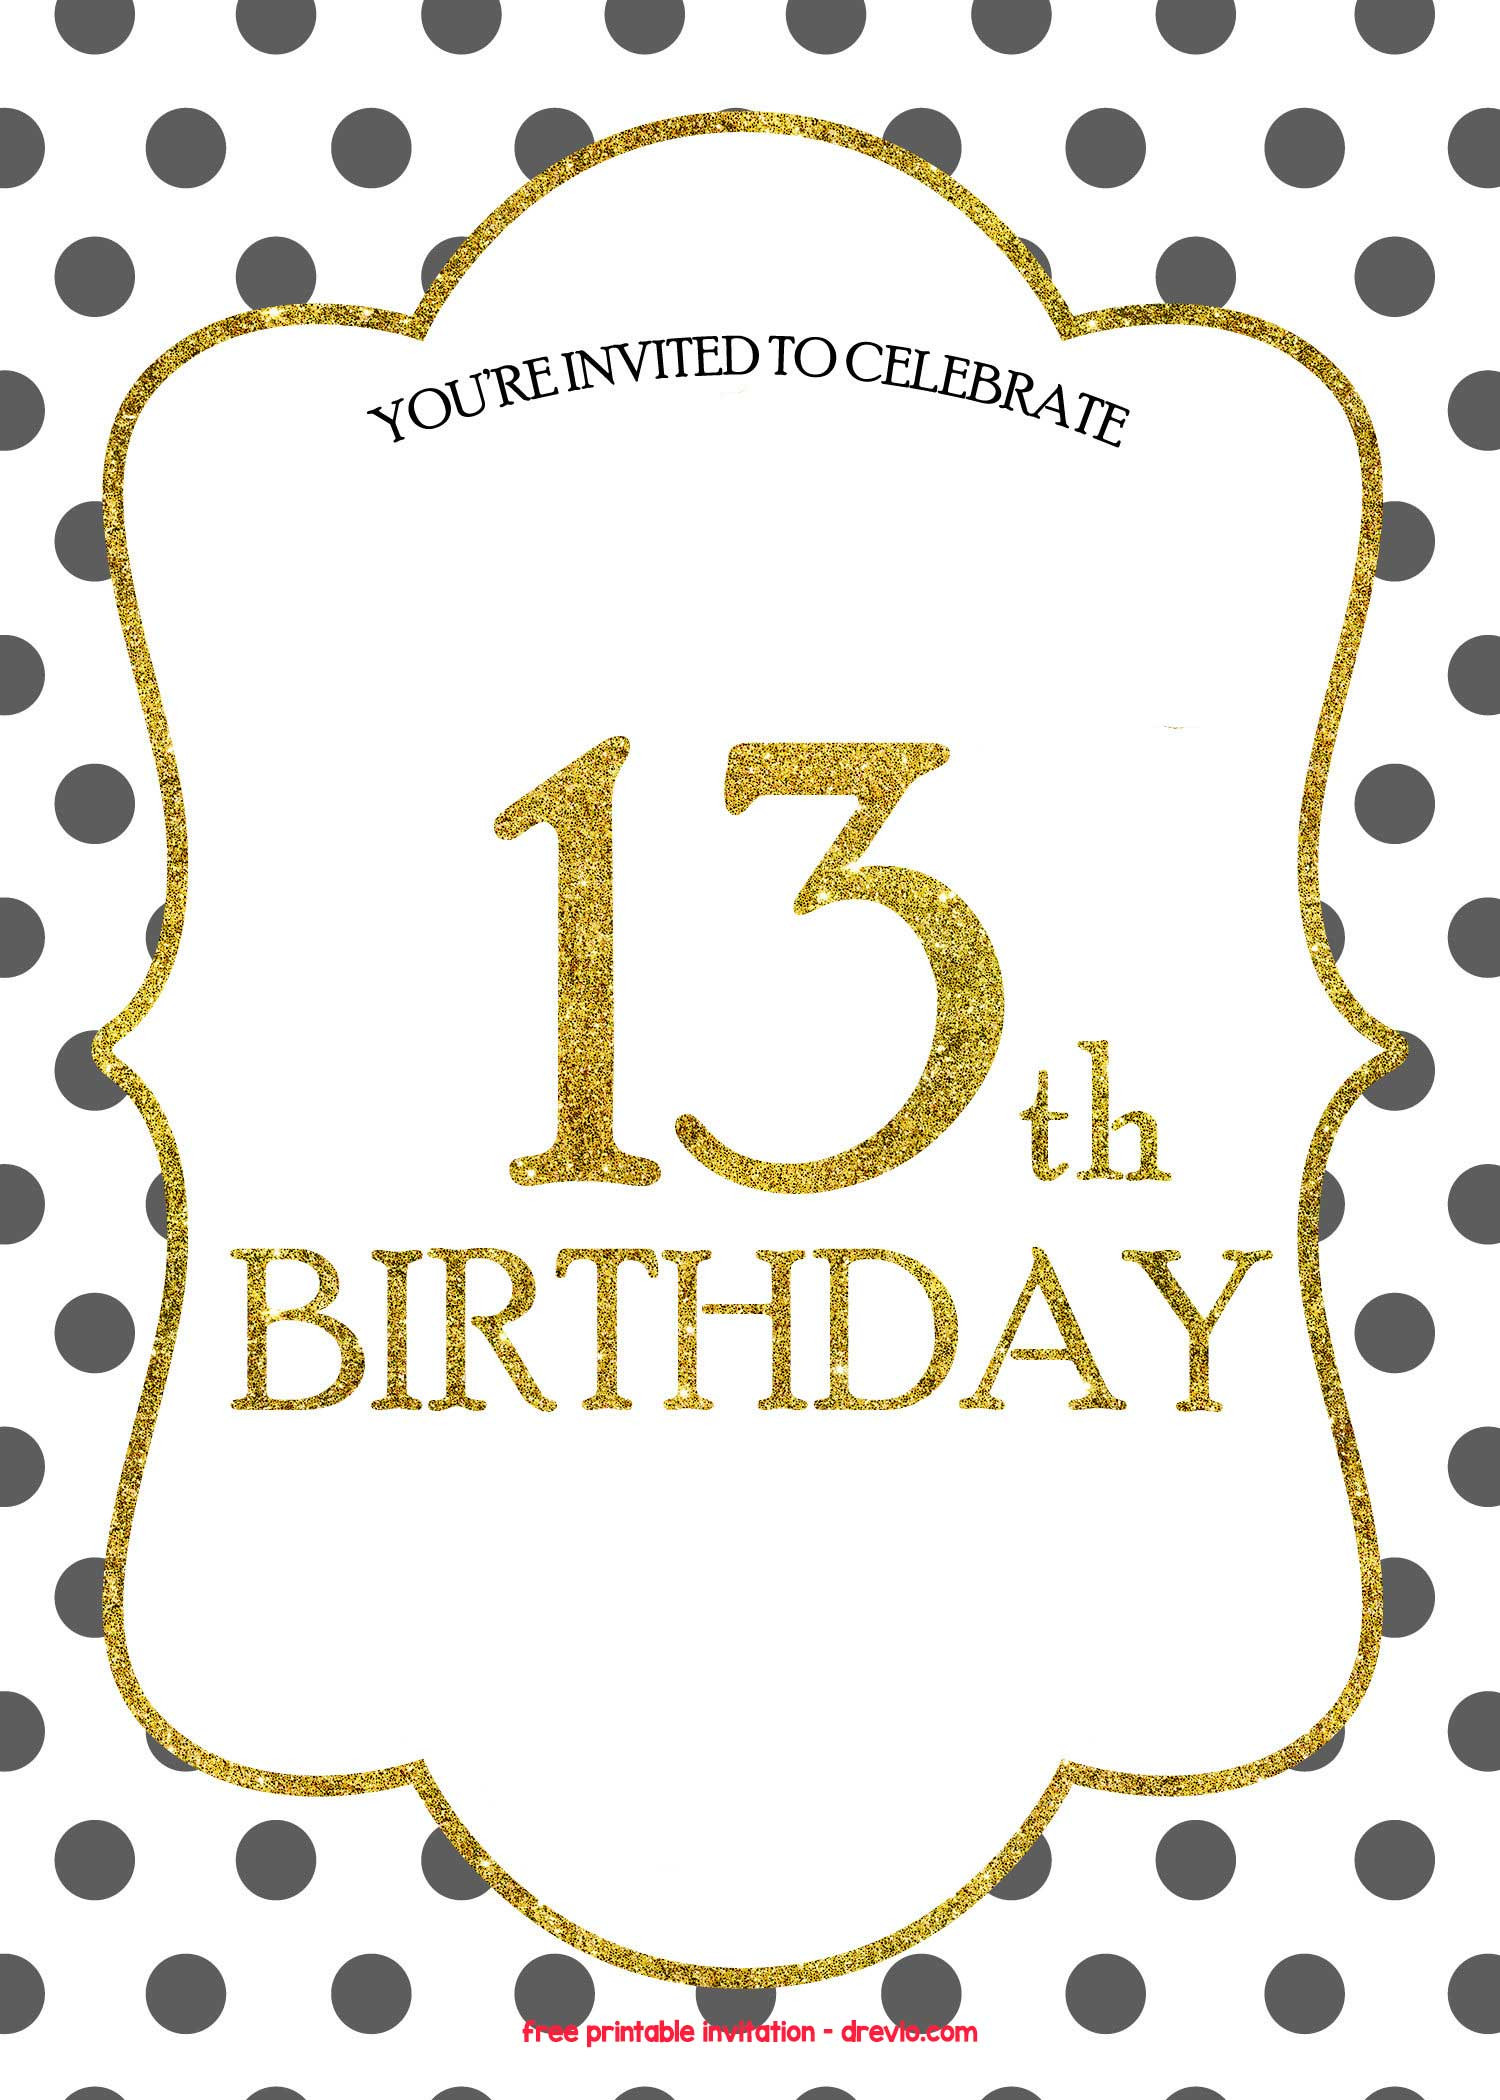 Free Templates For Birthday Invitations
 FREE 13th Birthday Invitations Templates